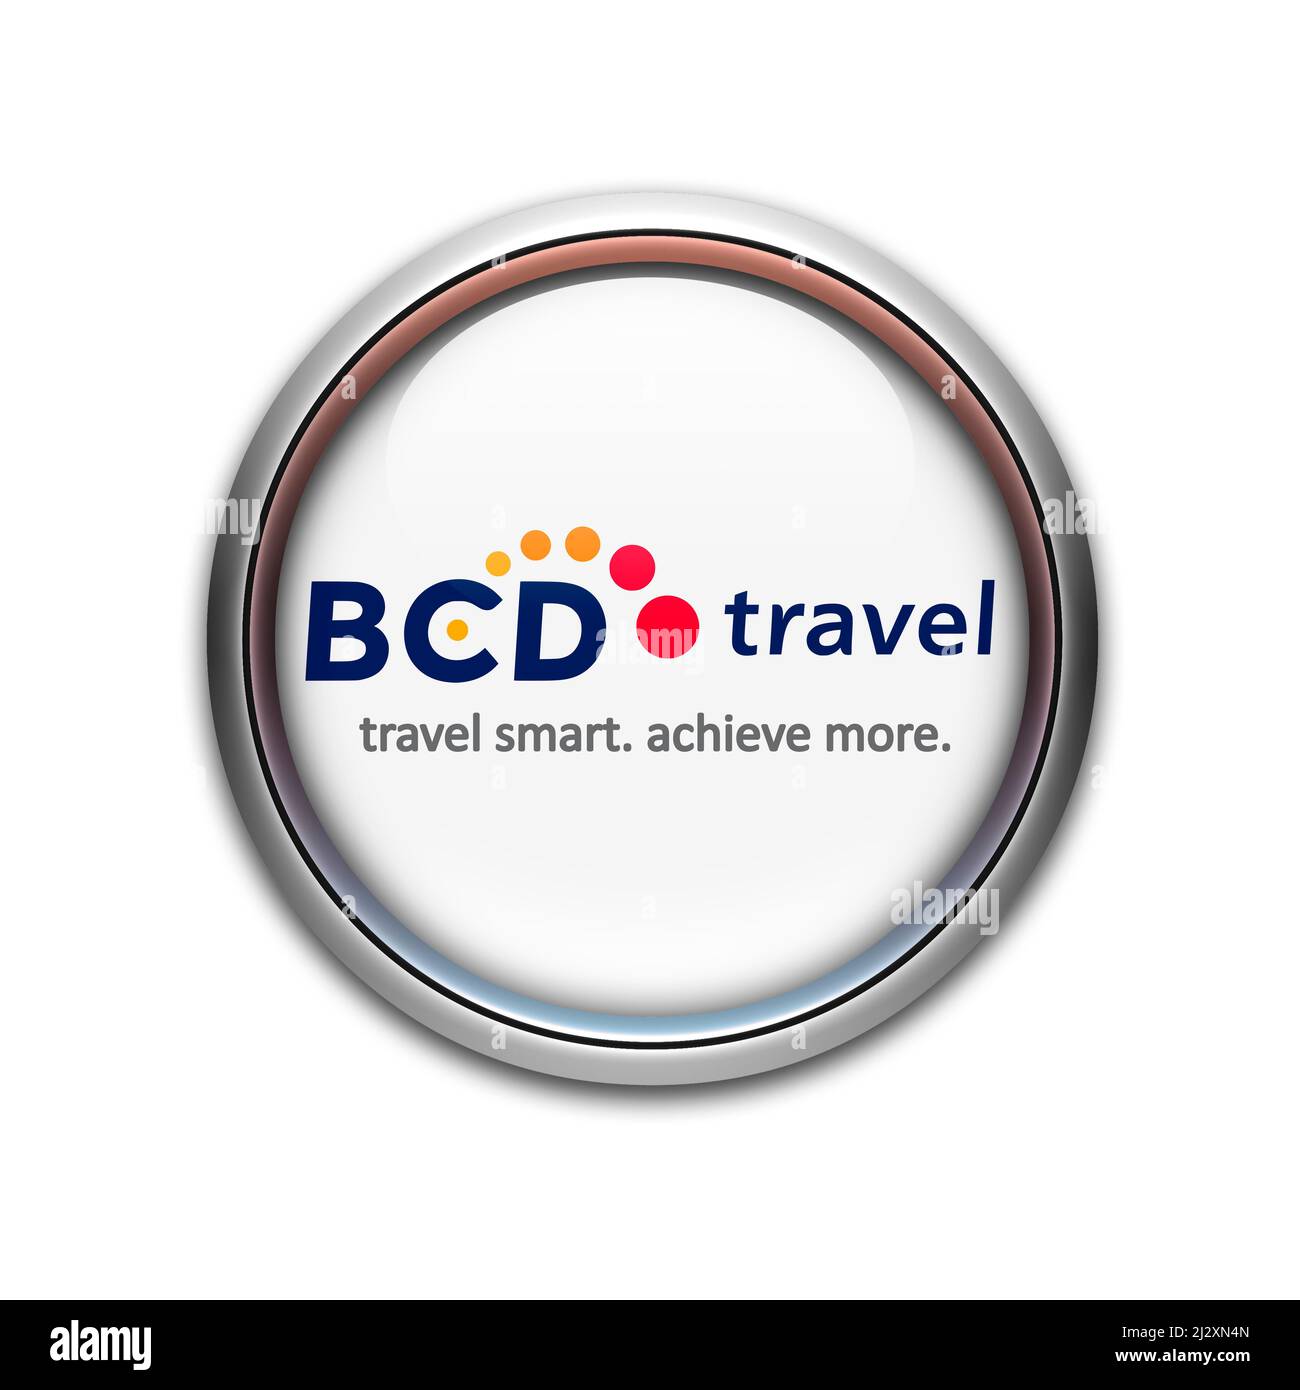 BCD travel logo Stock Photo